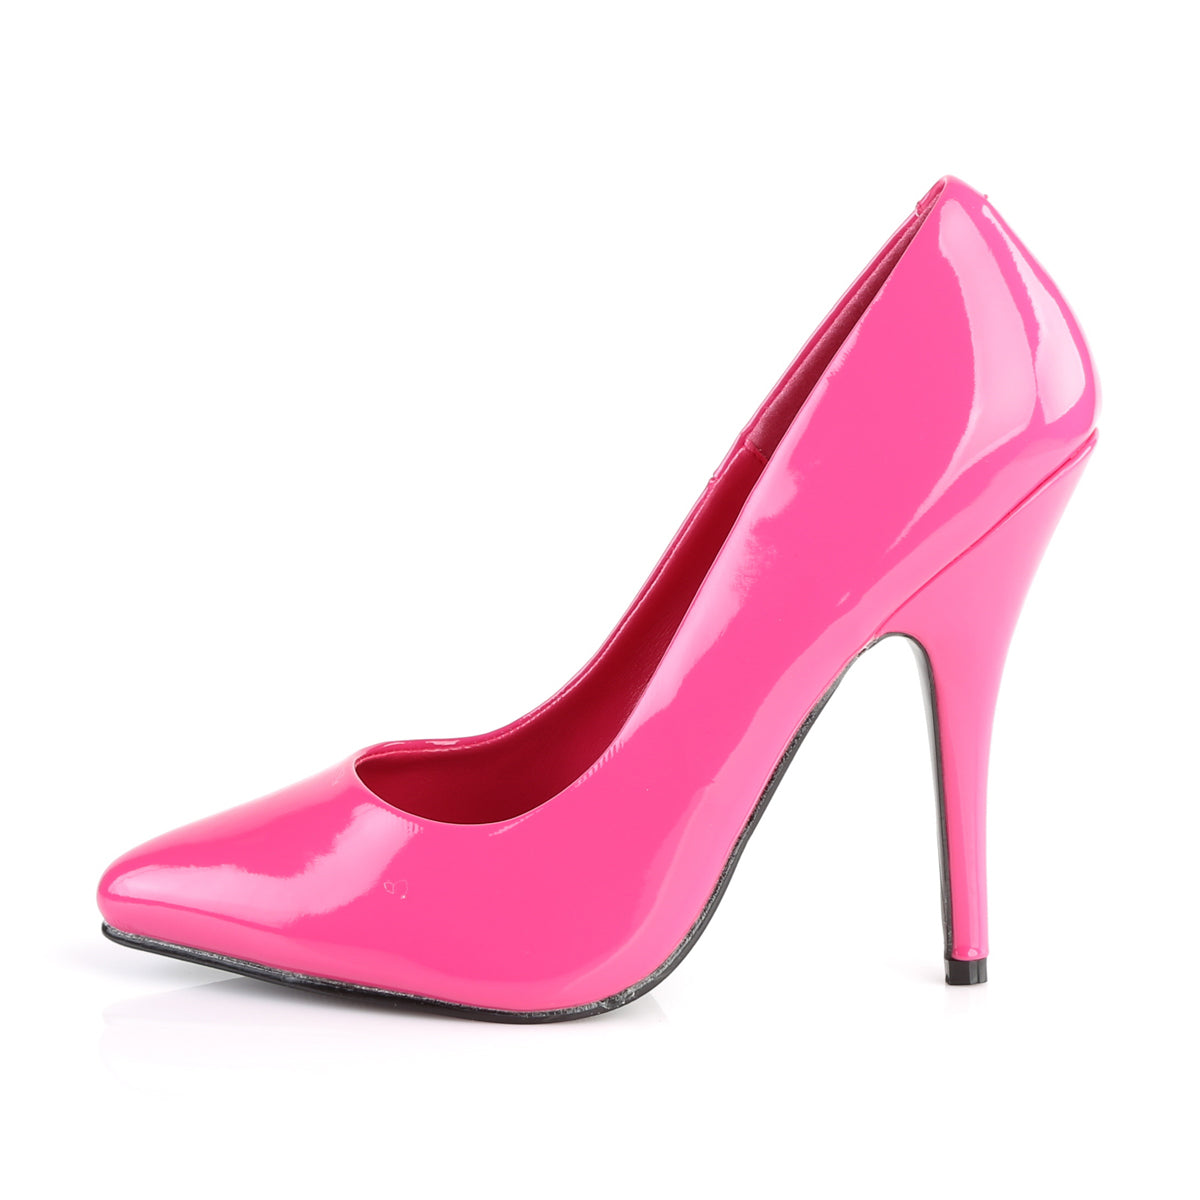 SEDUCE-420 Sexy Shoe 5" Heel Hot Pink Patent Fetish Footwear-Pleaser- Sexy Shoes Pole Dance Heels